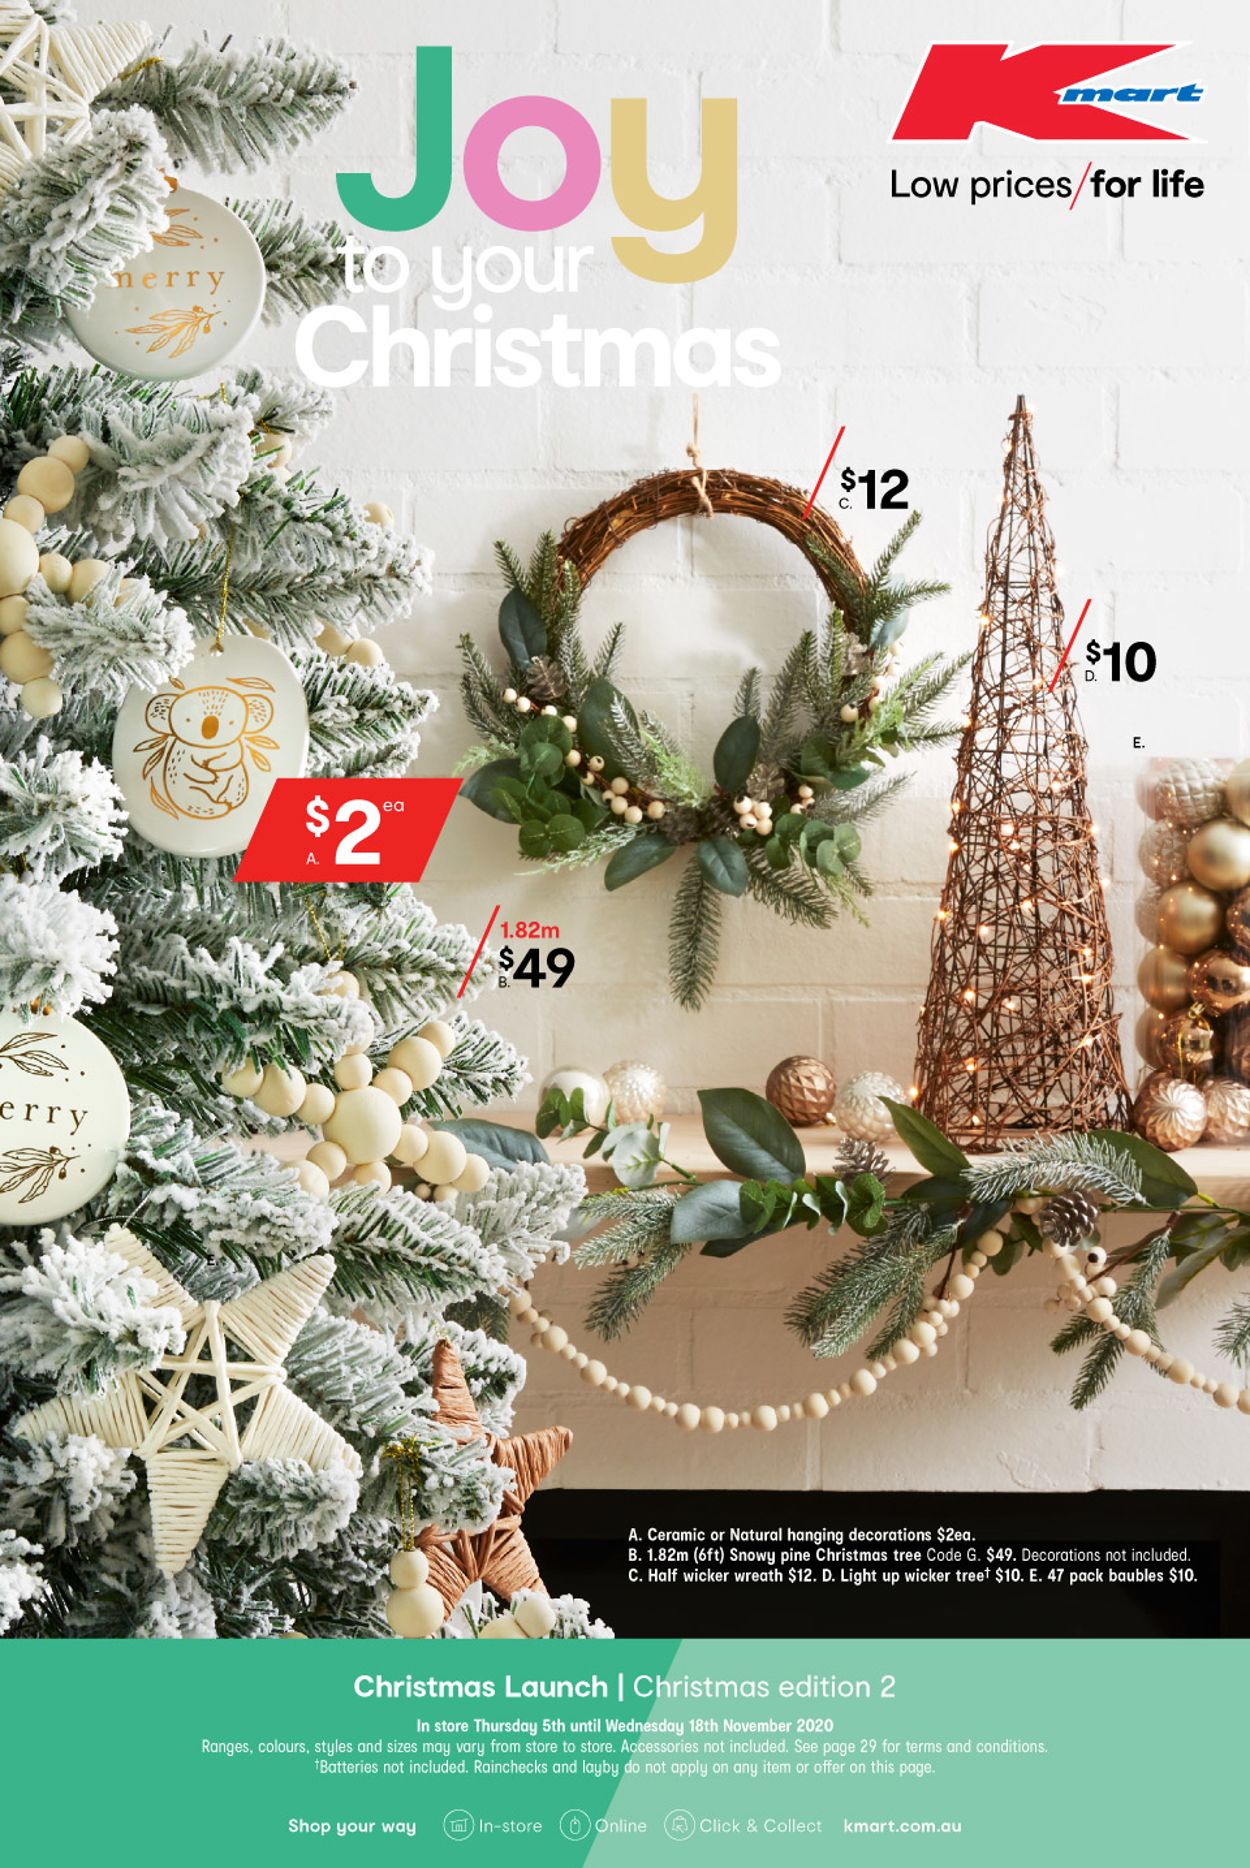 Kmart Australia View Our Christmas Catalogue Now! Facebook, 40% OFF